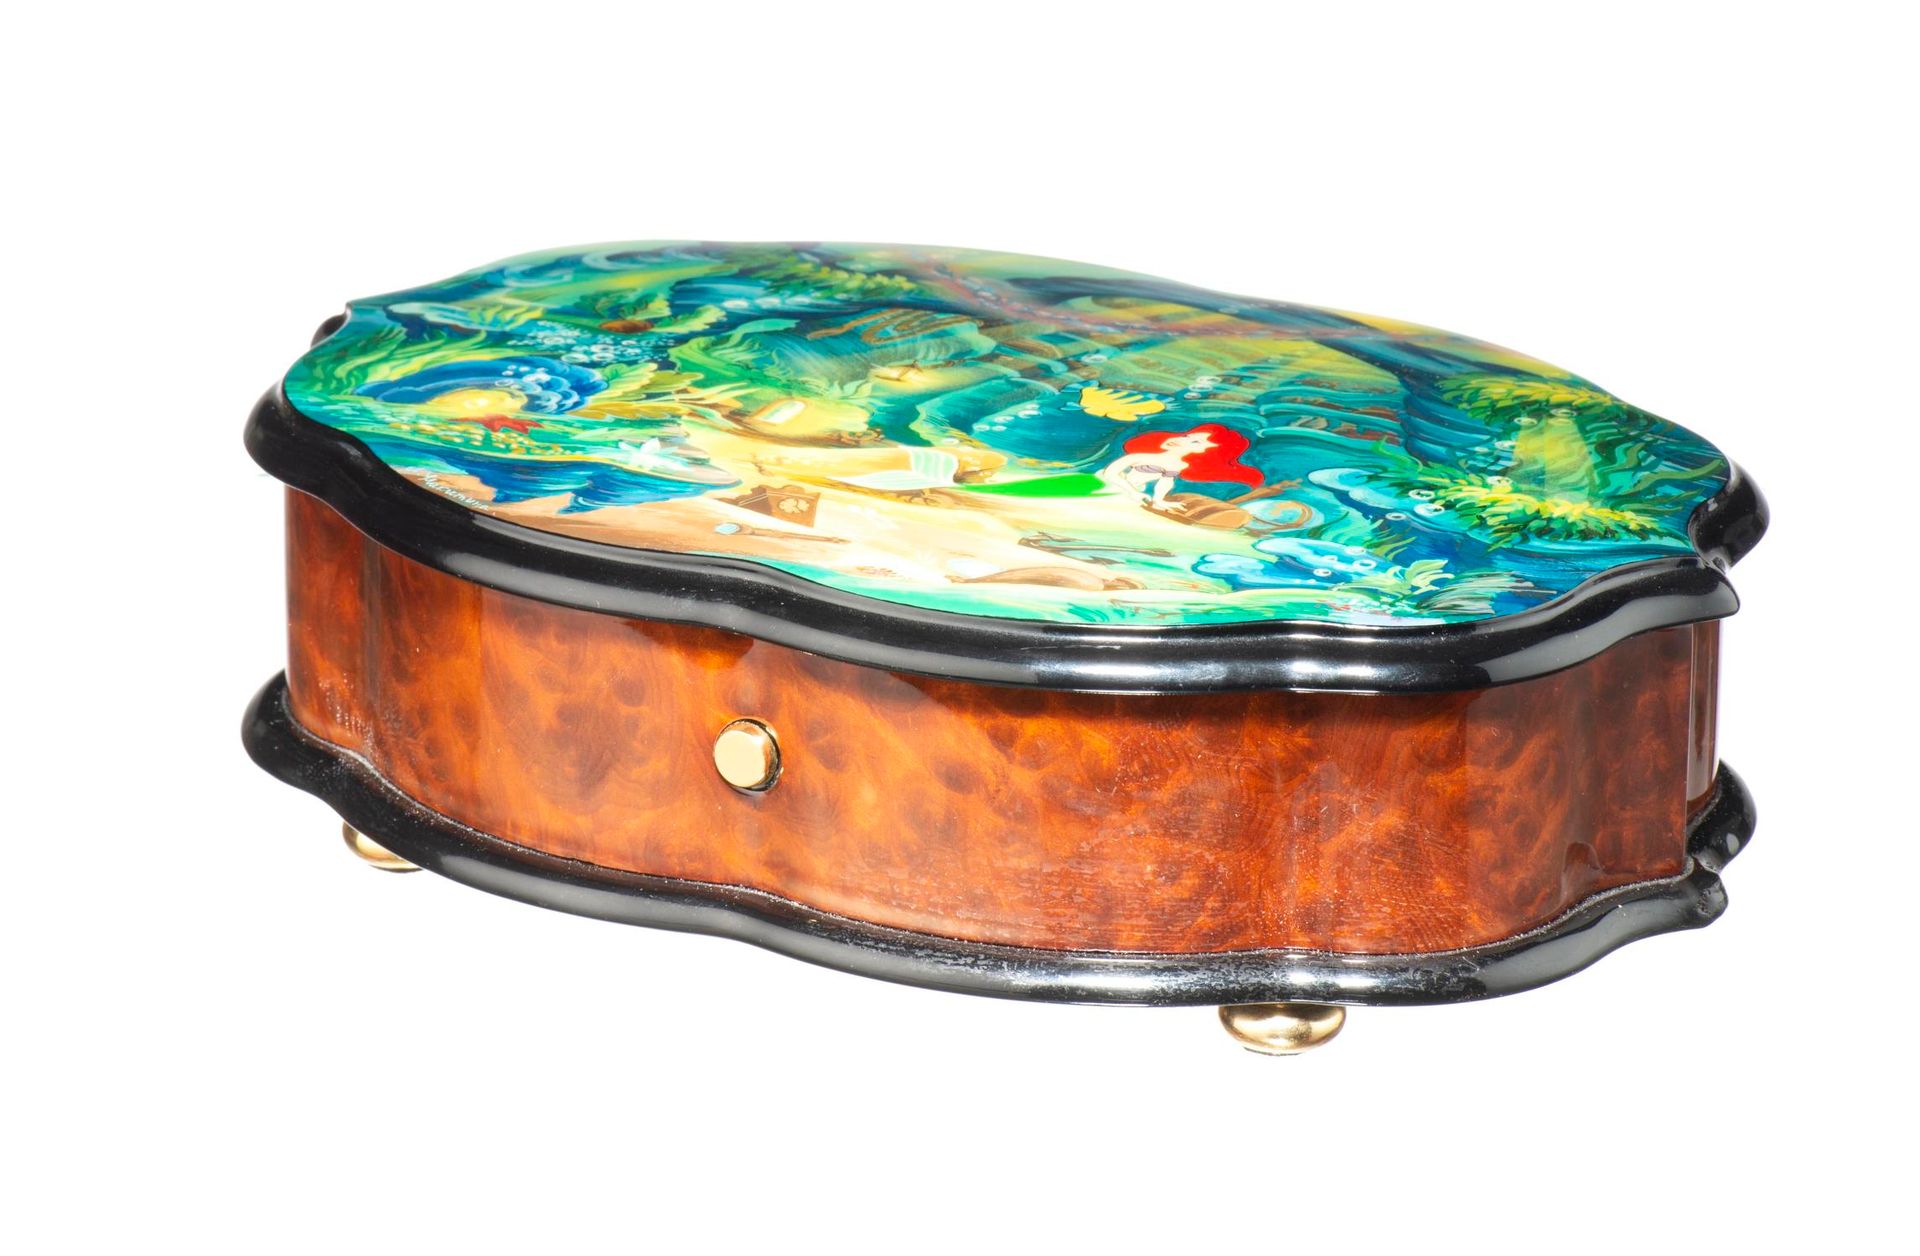 Null REUGE，"小美人鱼 "音乐盒，木质并绘有迪斯尼电影场景的装饰，有72个叶片机芯和3种旋律。

26 x 18 x 8 厘米